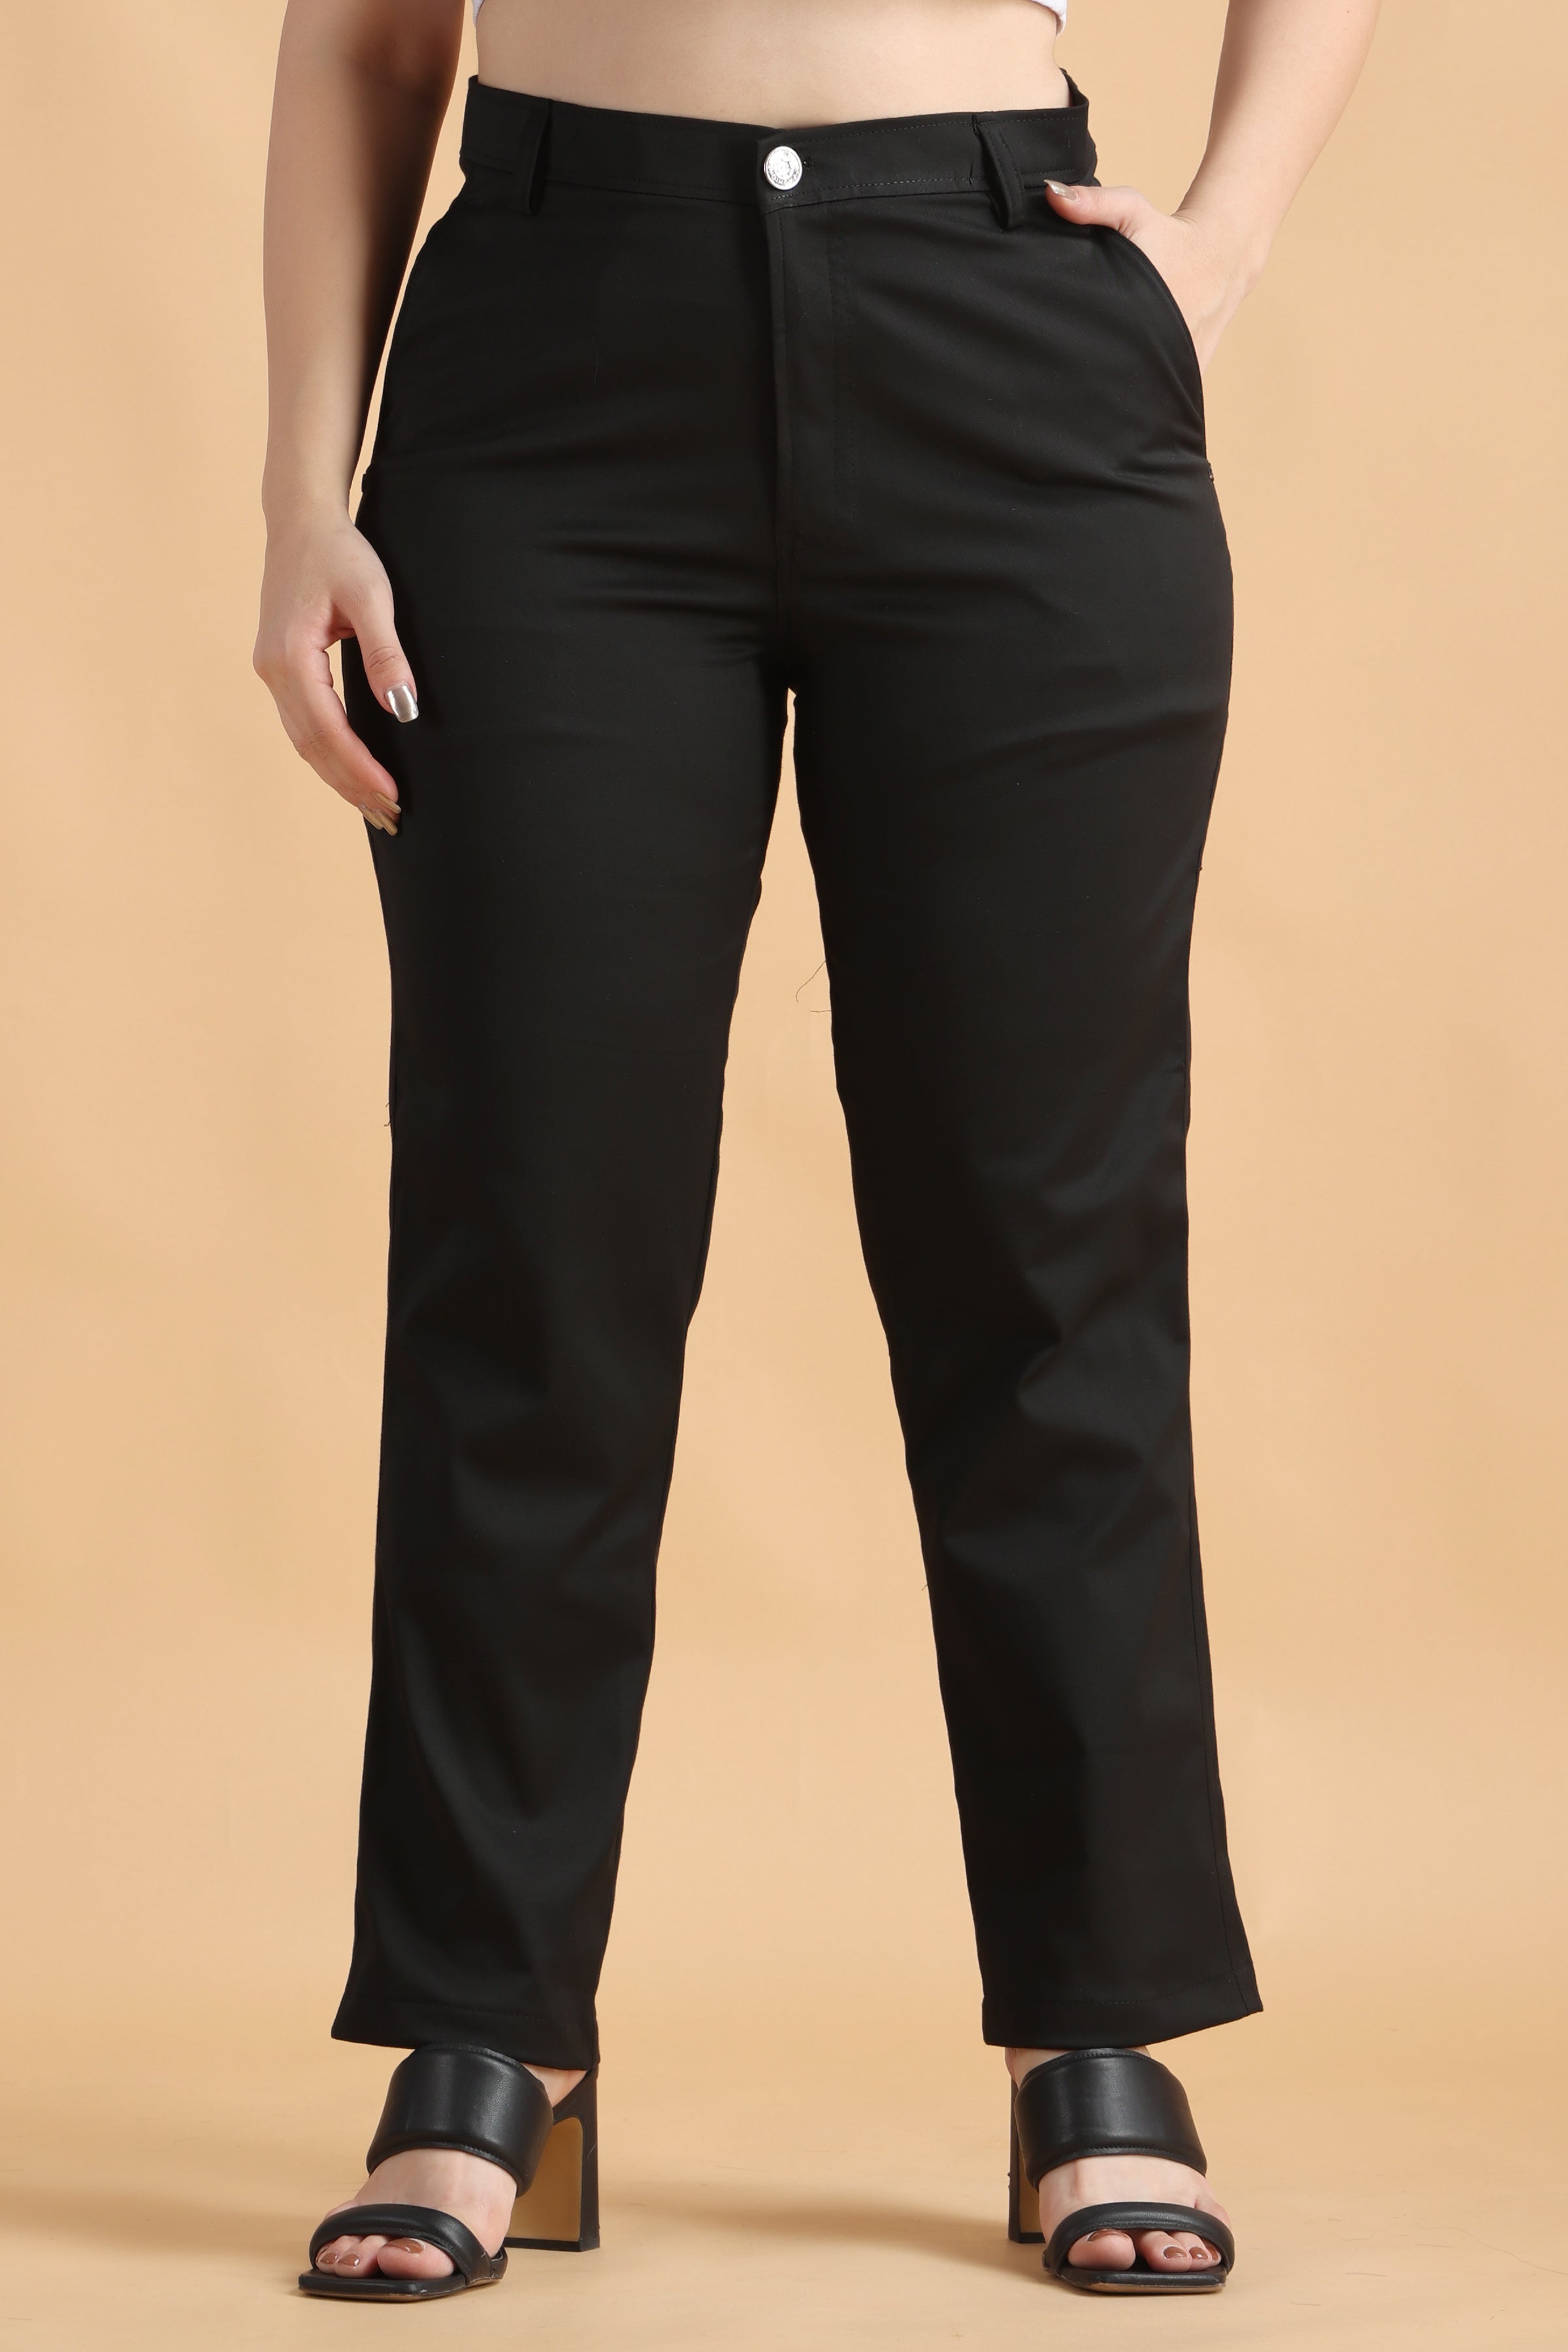 Buy Plus Size Black Formal Pant  Plus Size Formal Pants For Women Apella